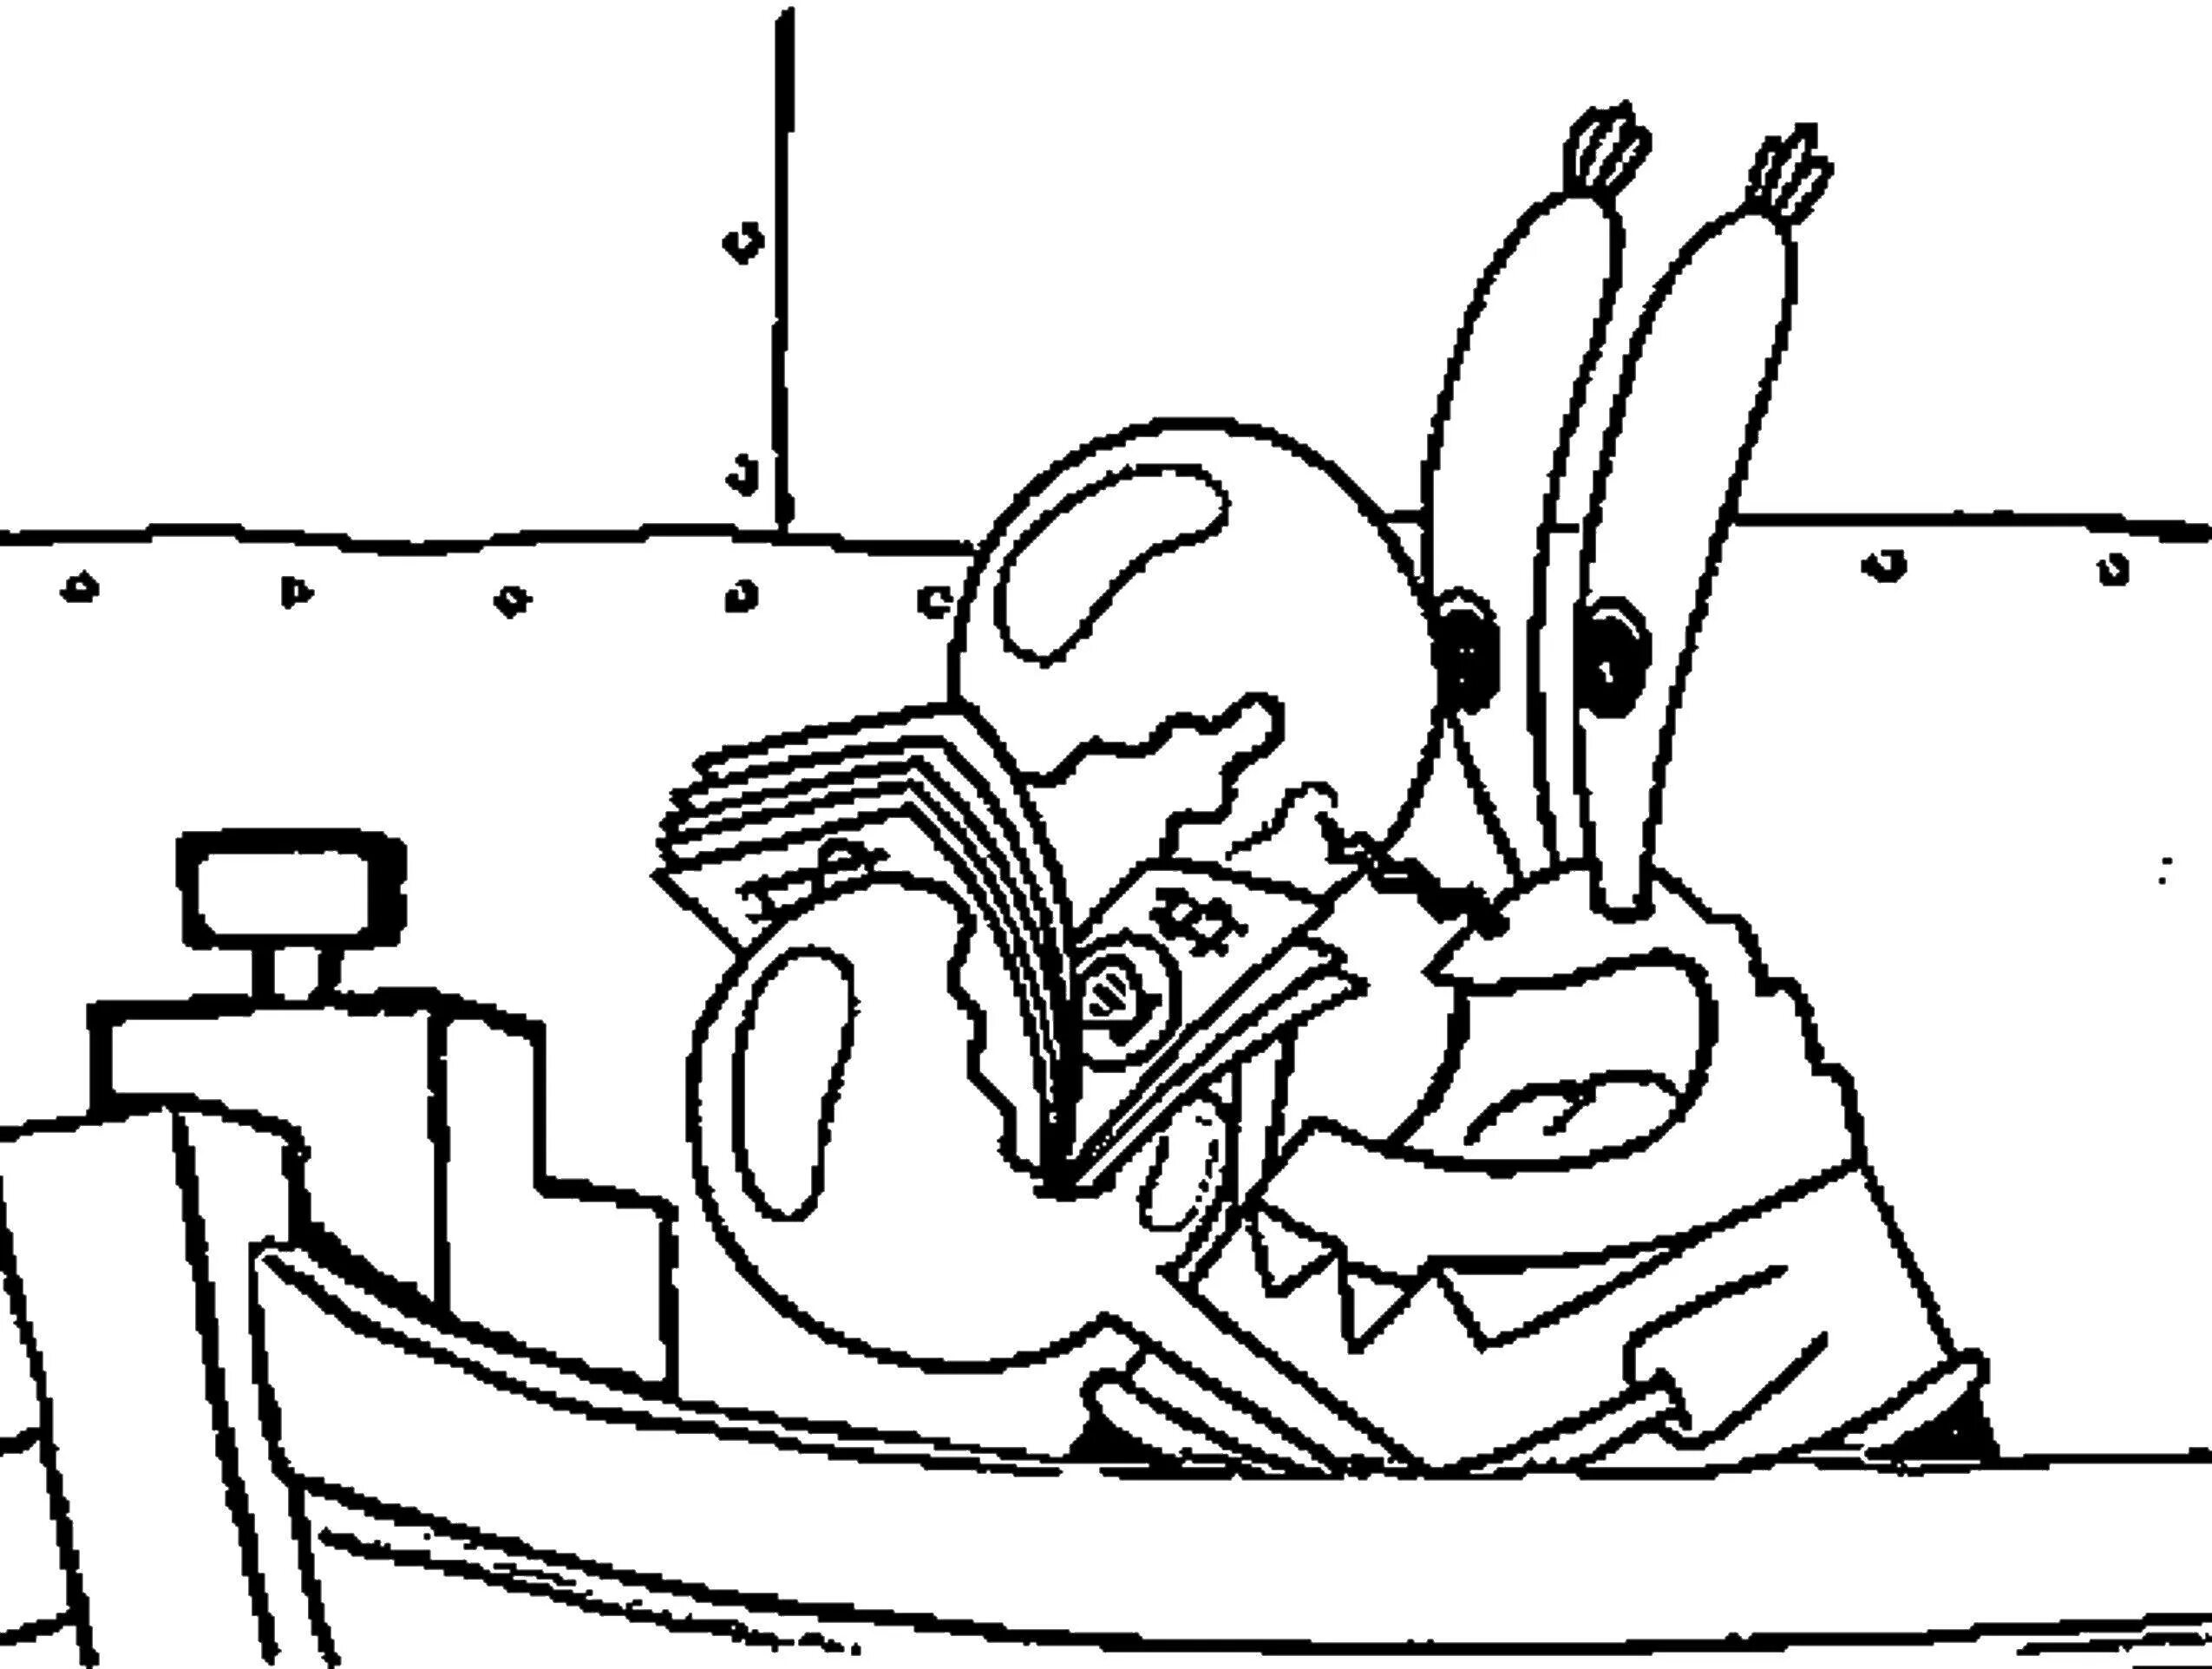 Krusty Krab humorous coloring book